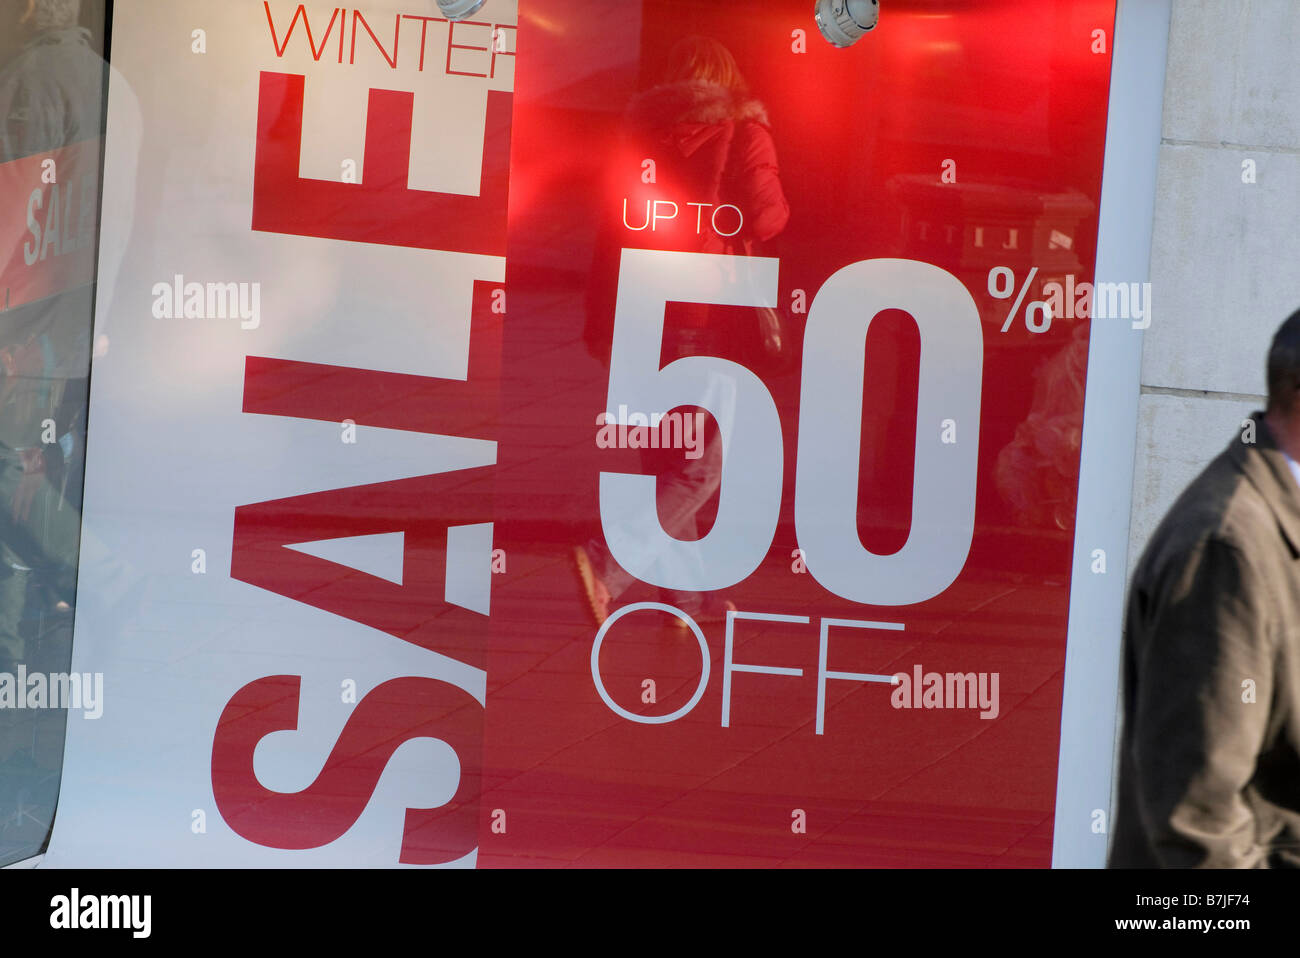 half price sale sign in shop window Stock Photo